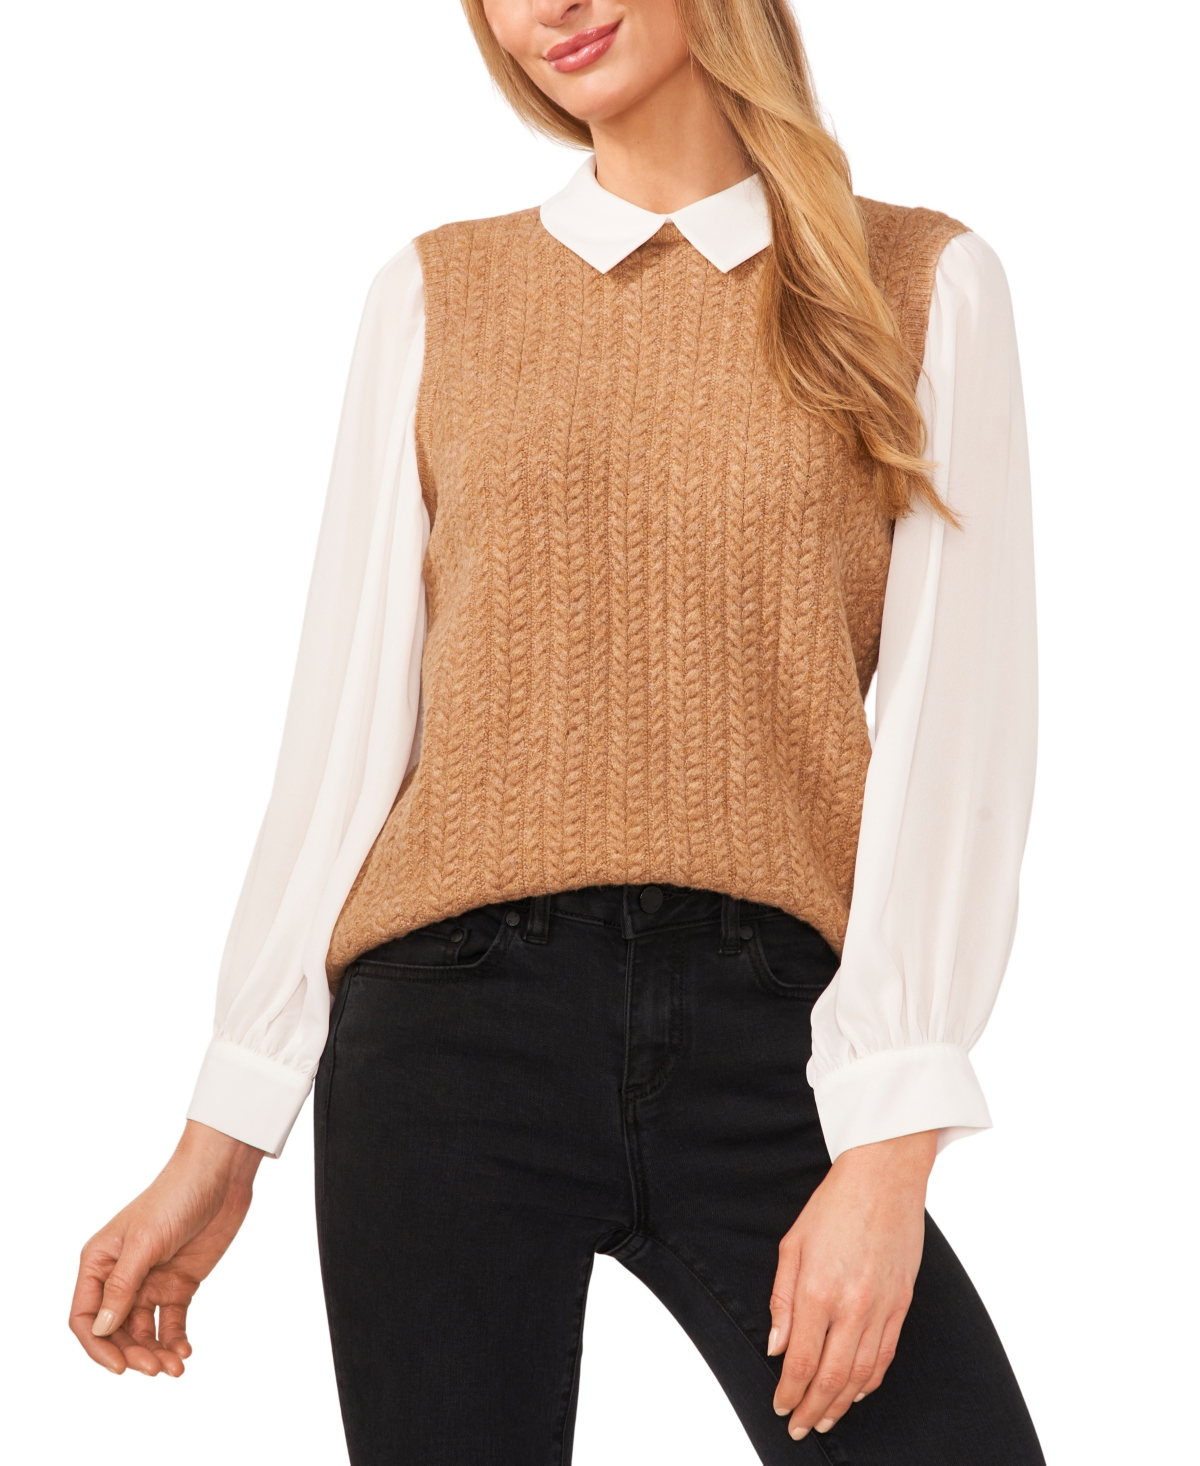 Cece Women's Peter-Pan Collar Pullover Long Sleeve Sweater, Rich Black, M